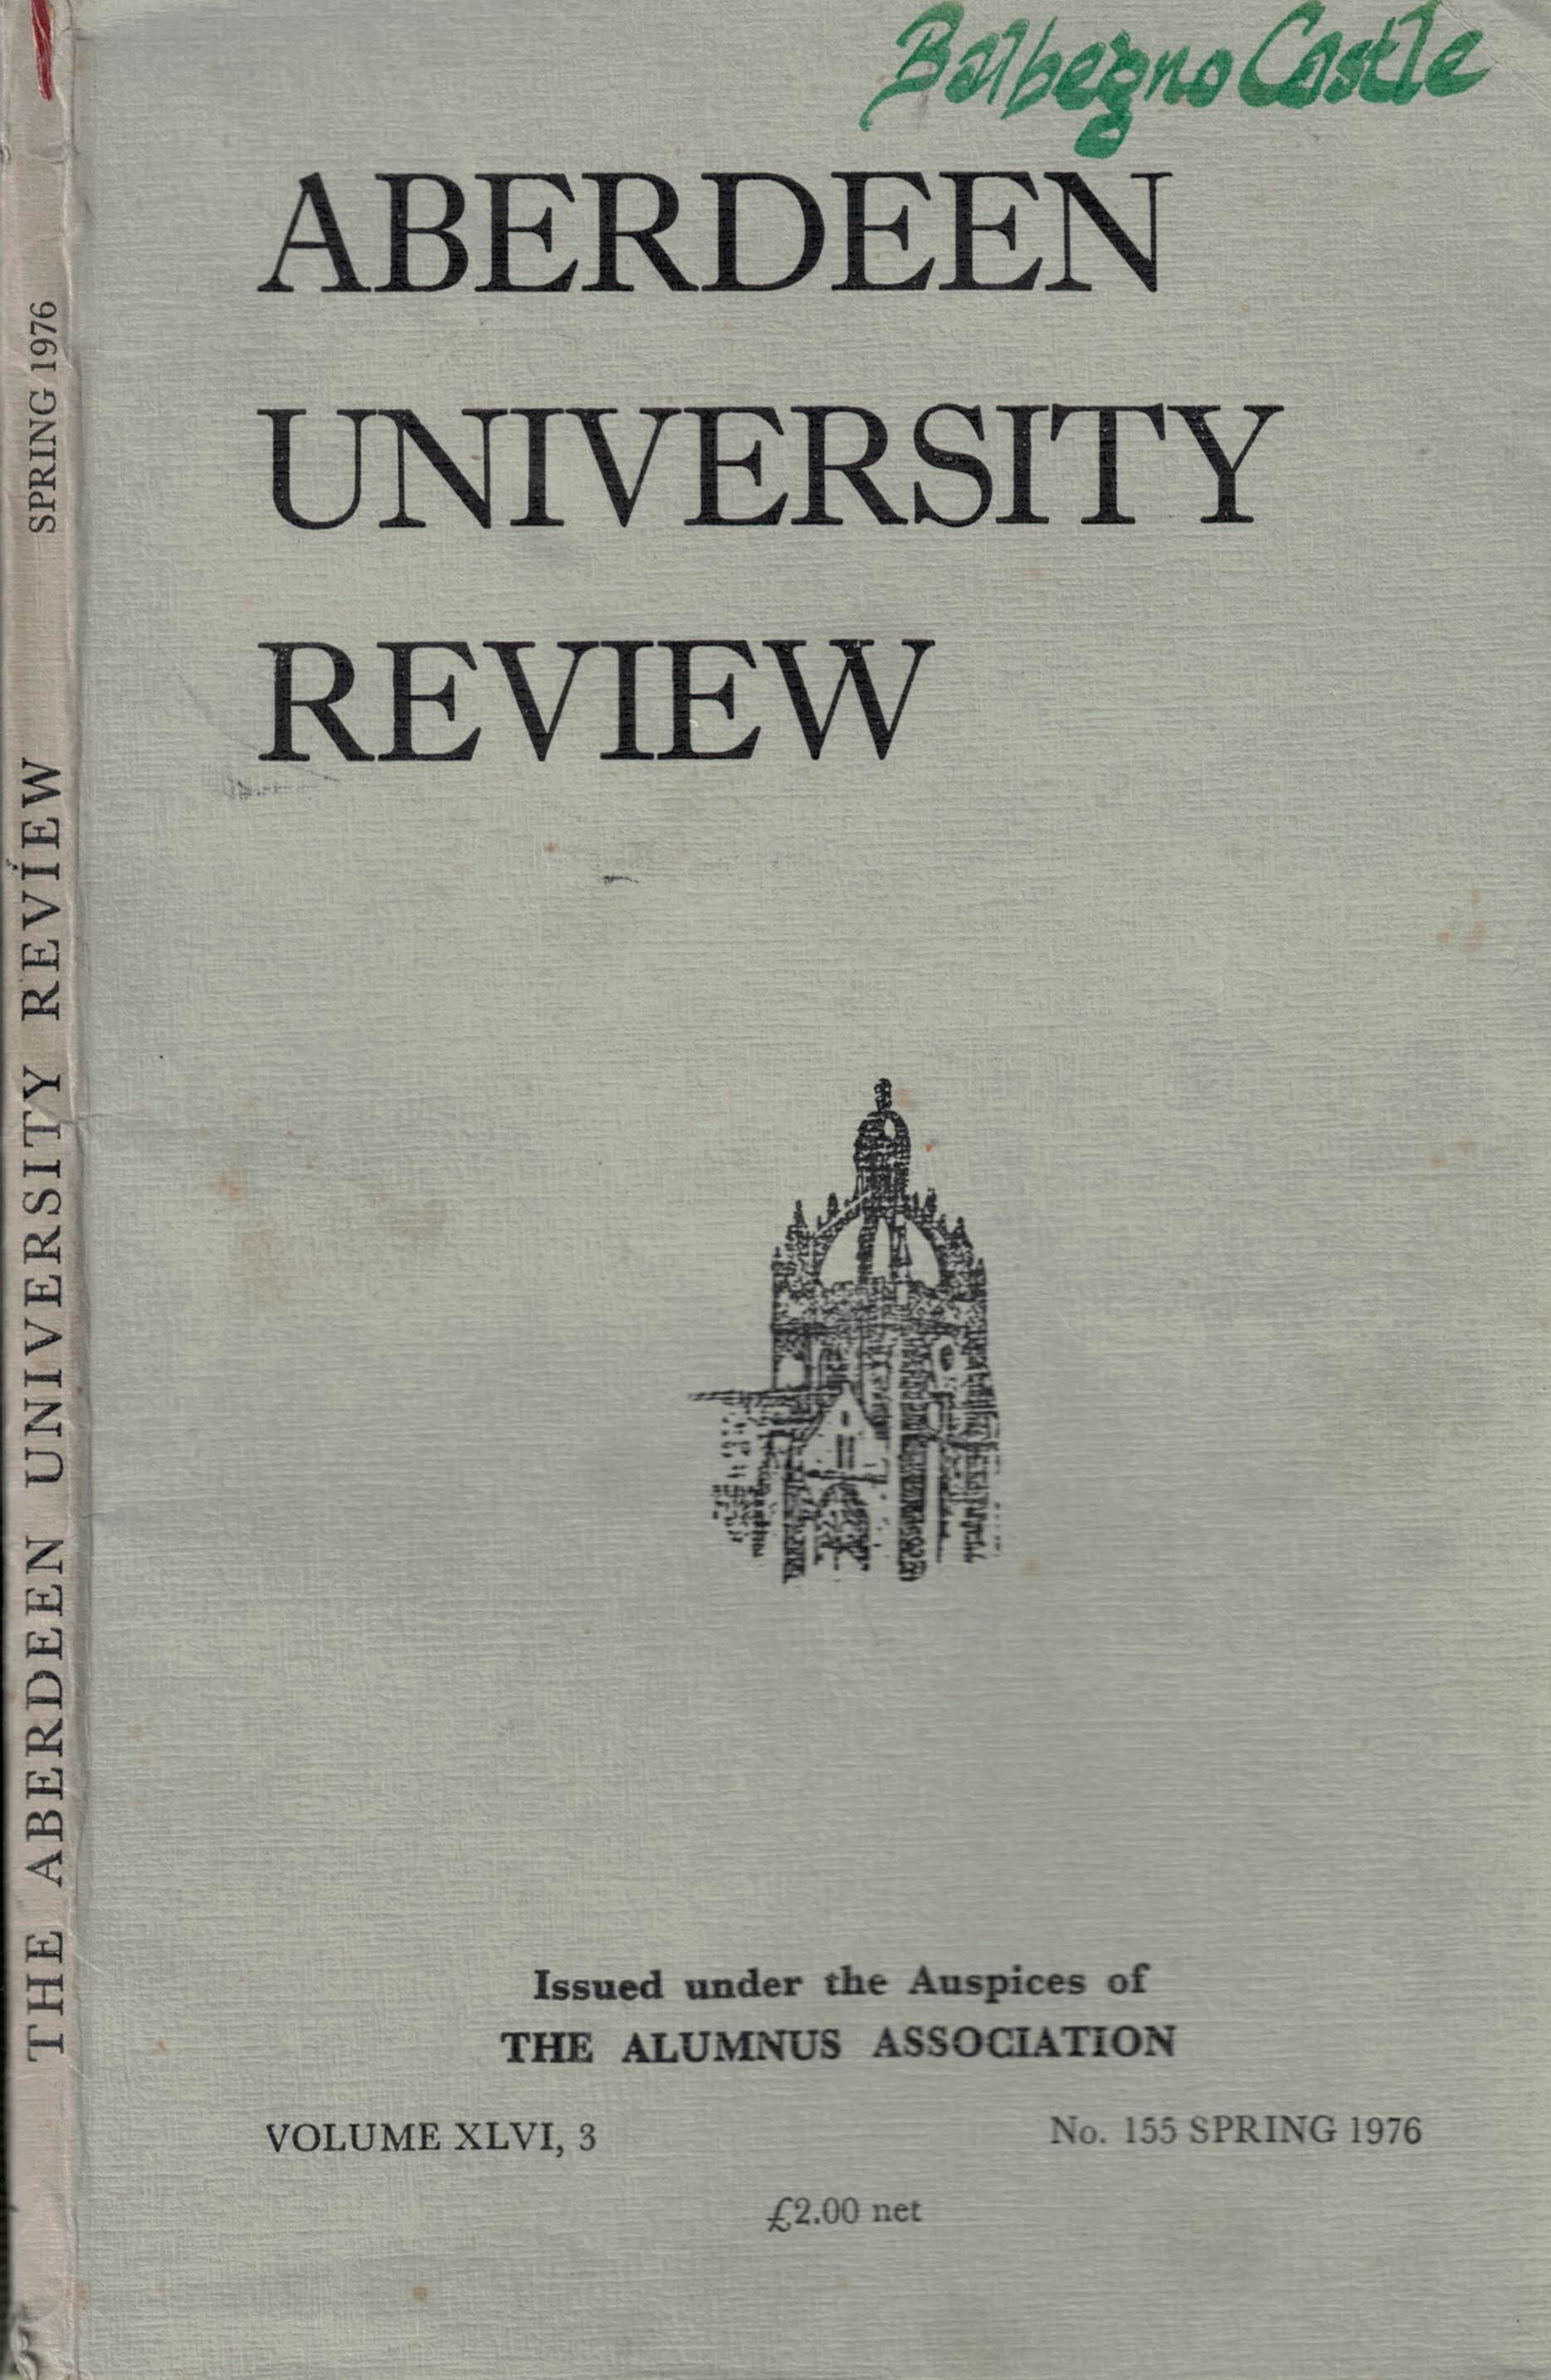 Aberdeen University Review. Volume XLVI, 3. No. 155 Spring 1976.